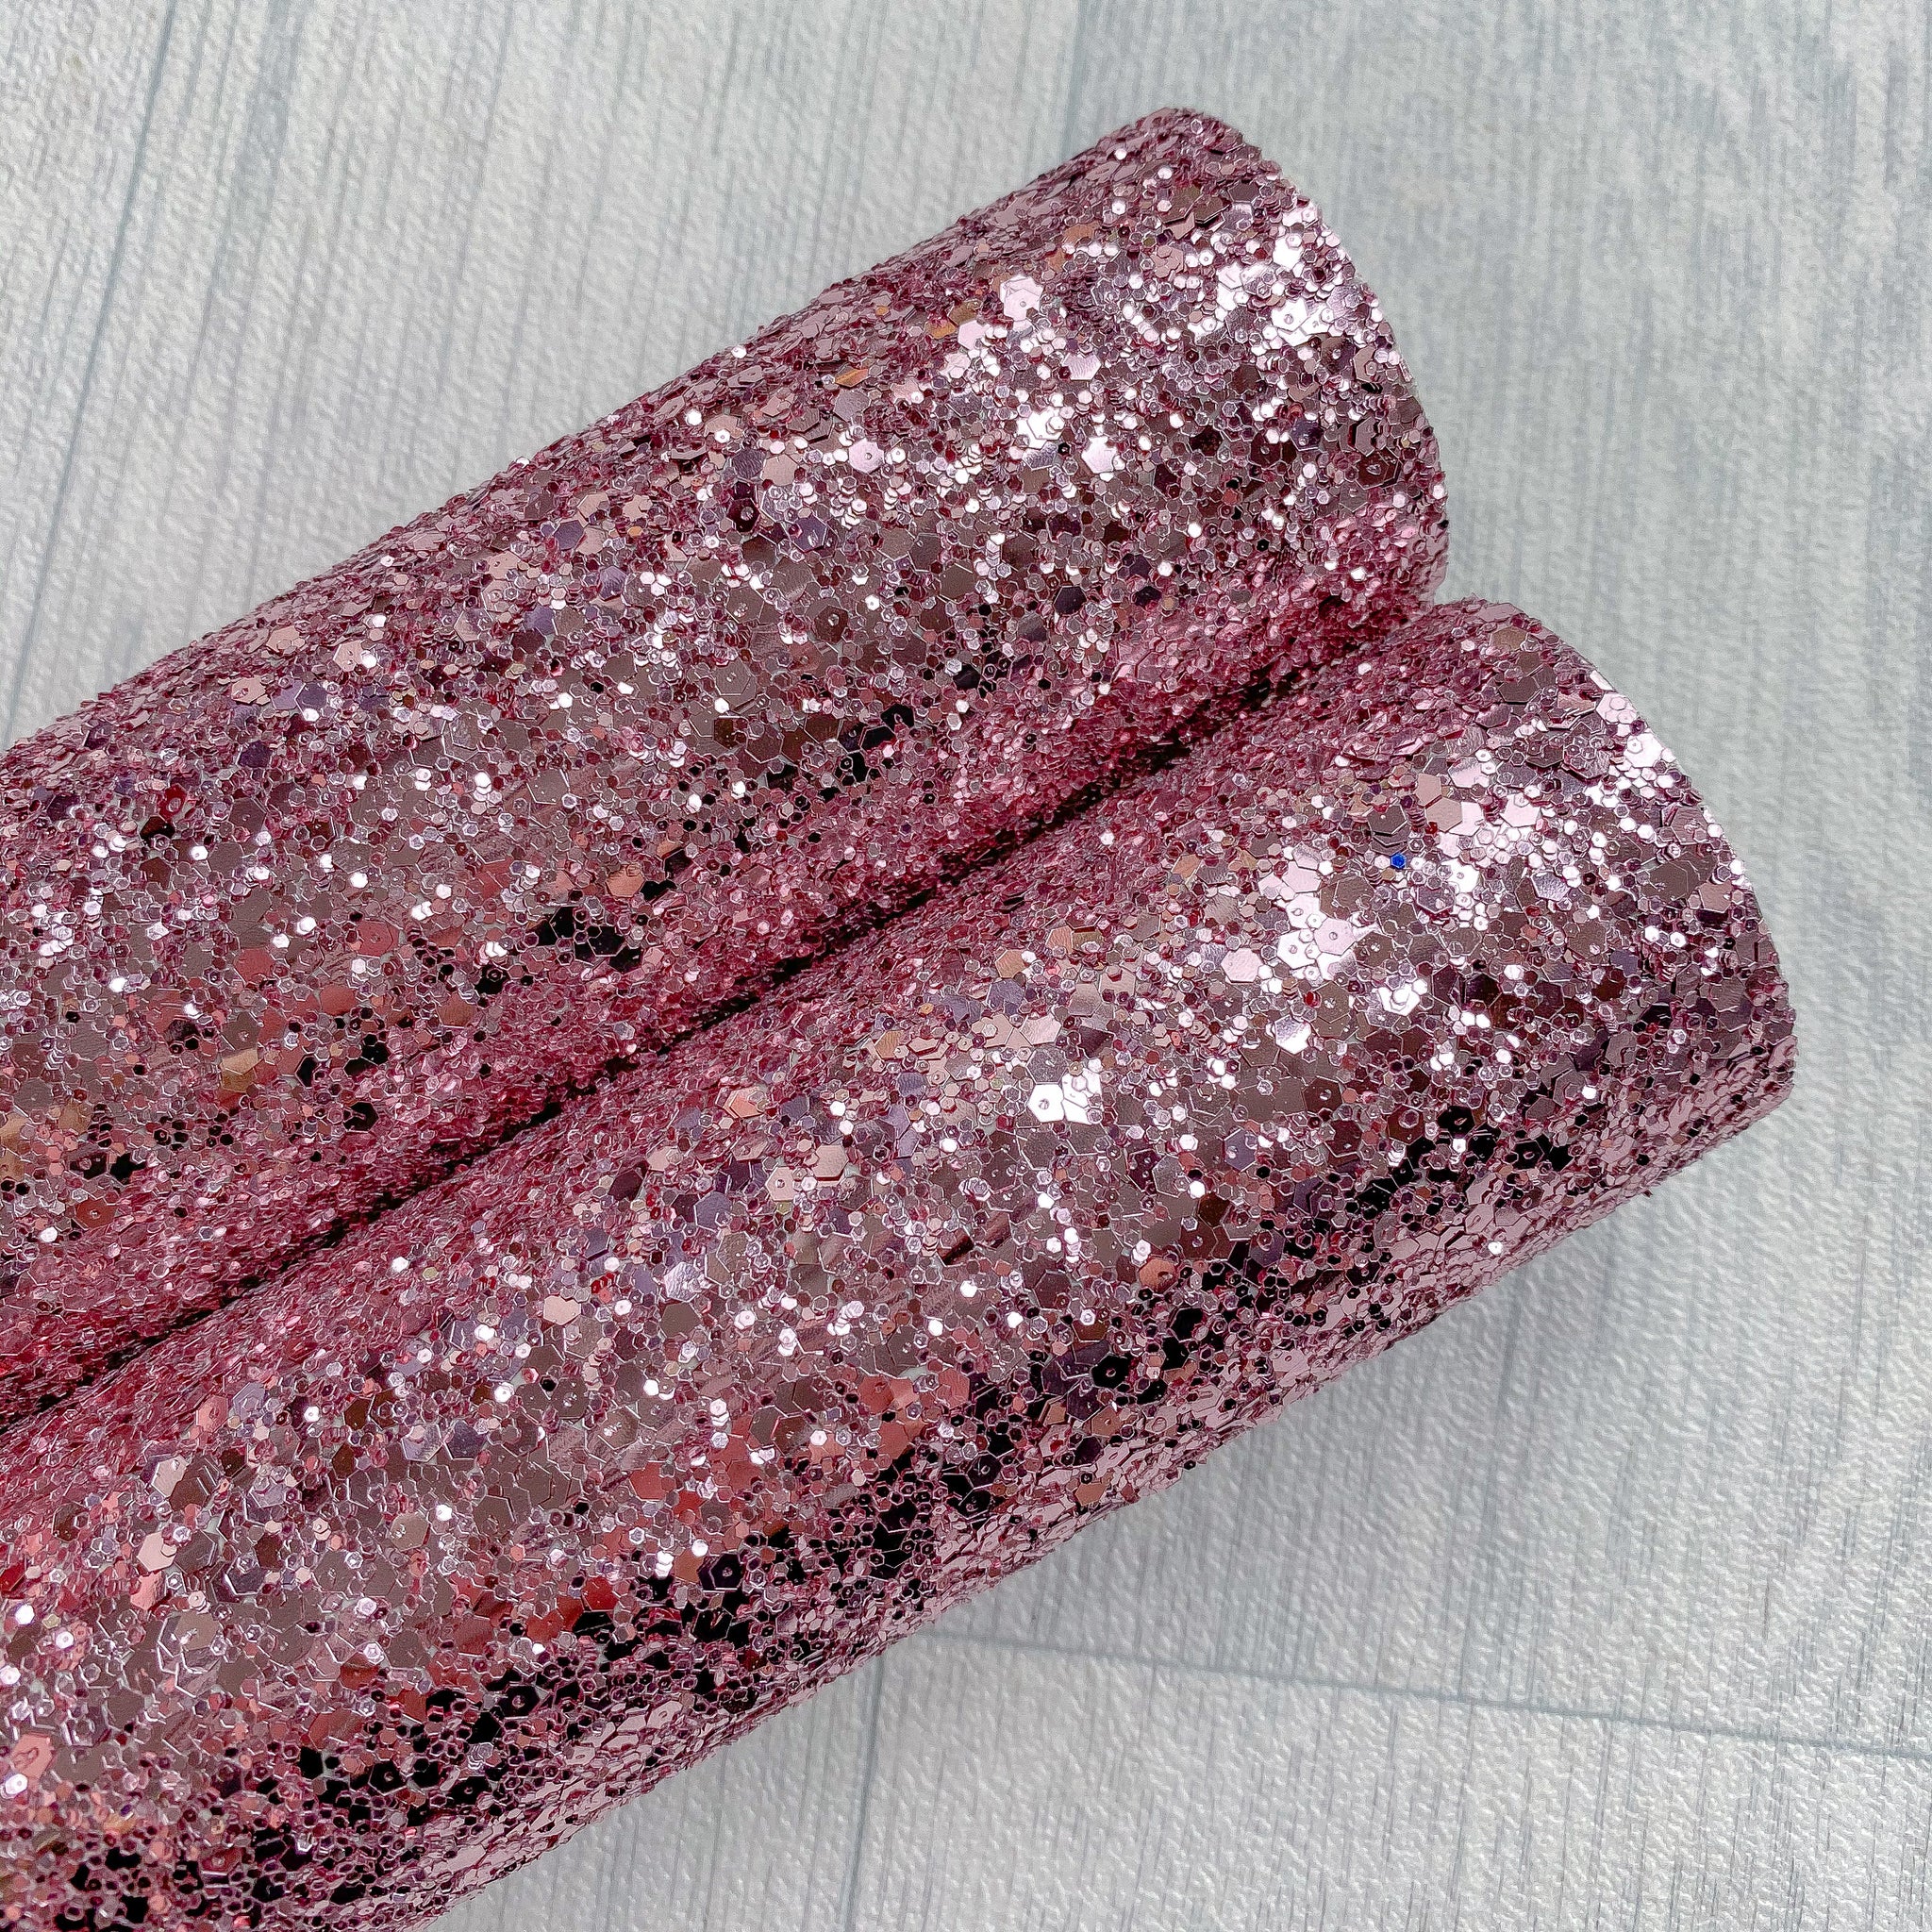 Blush pink Chunky Glitter fabric A4 sheet bow crafts supplies glitter material wallpaper maker hair bows 